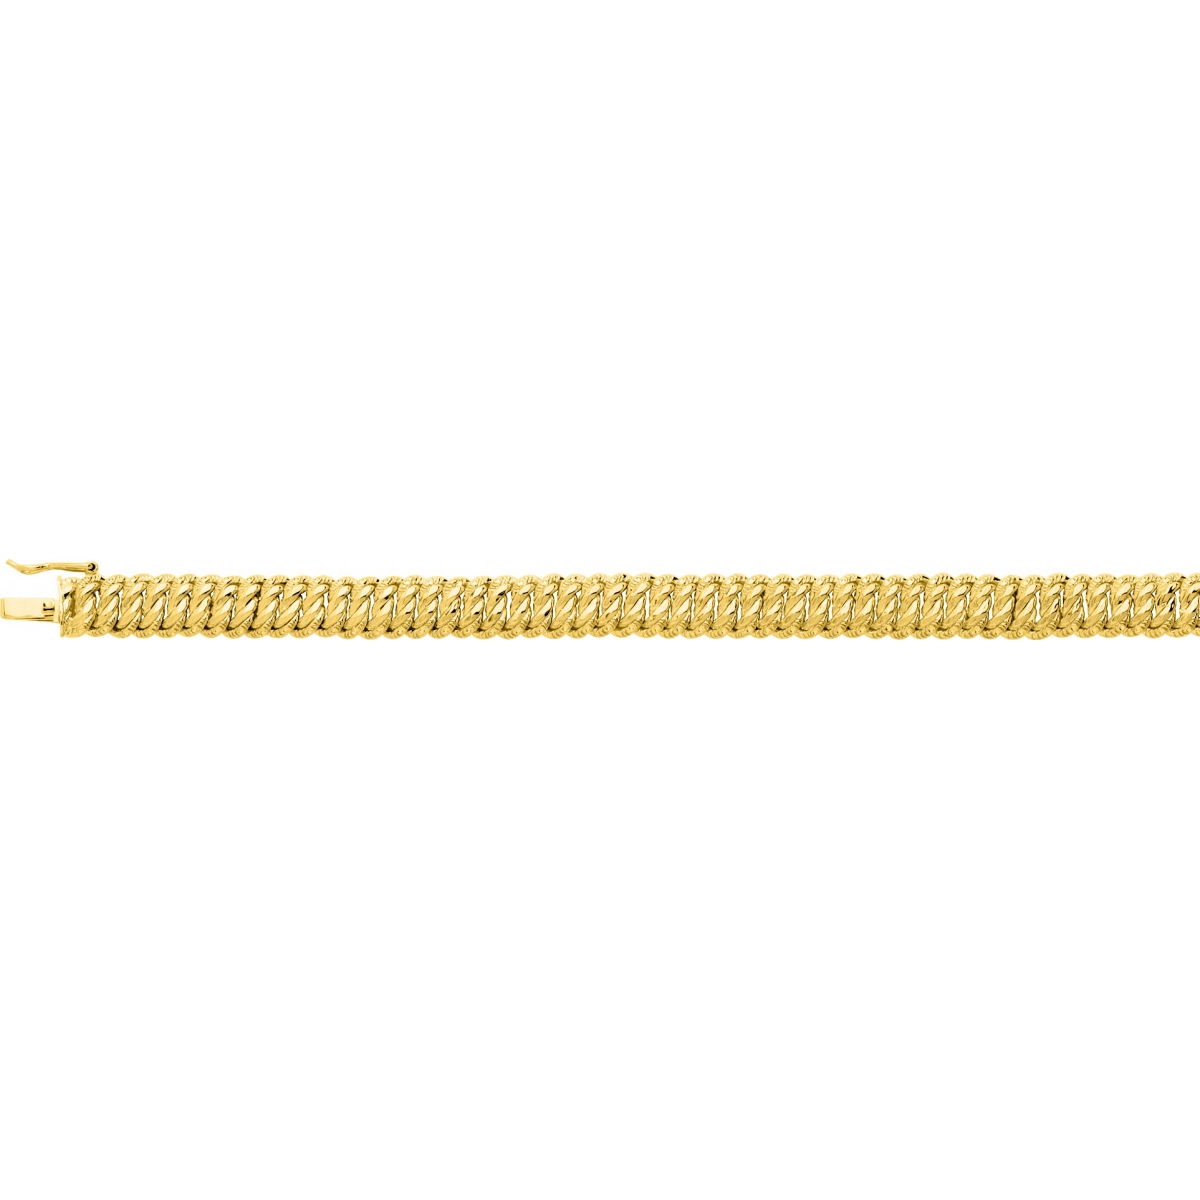 Bracelet gold plated Brass - Size: 18  Lua Blanca  101440B.18